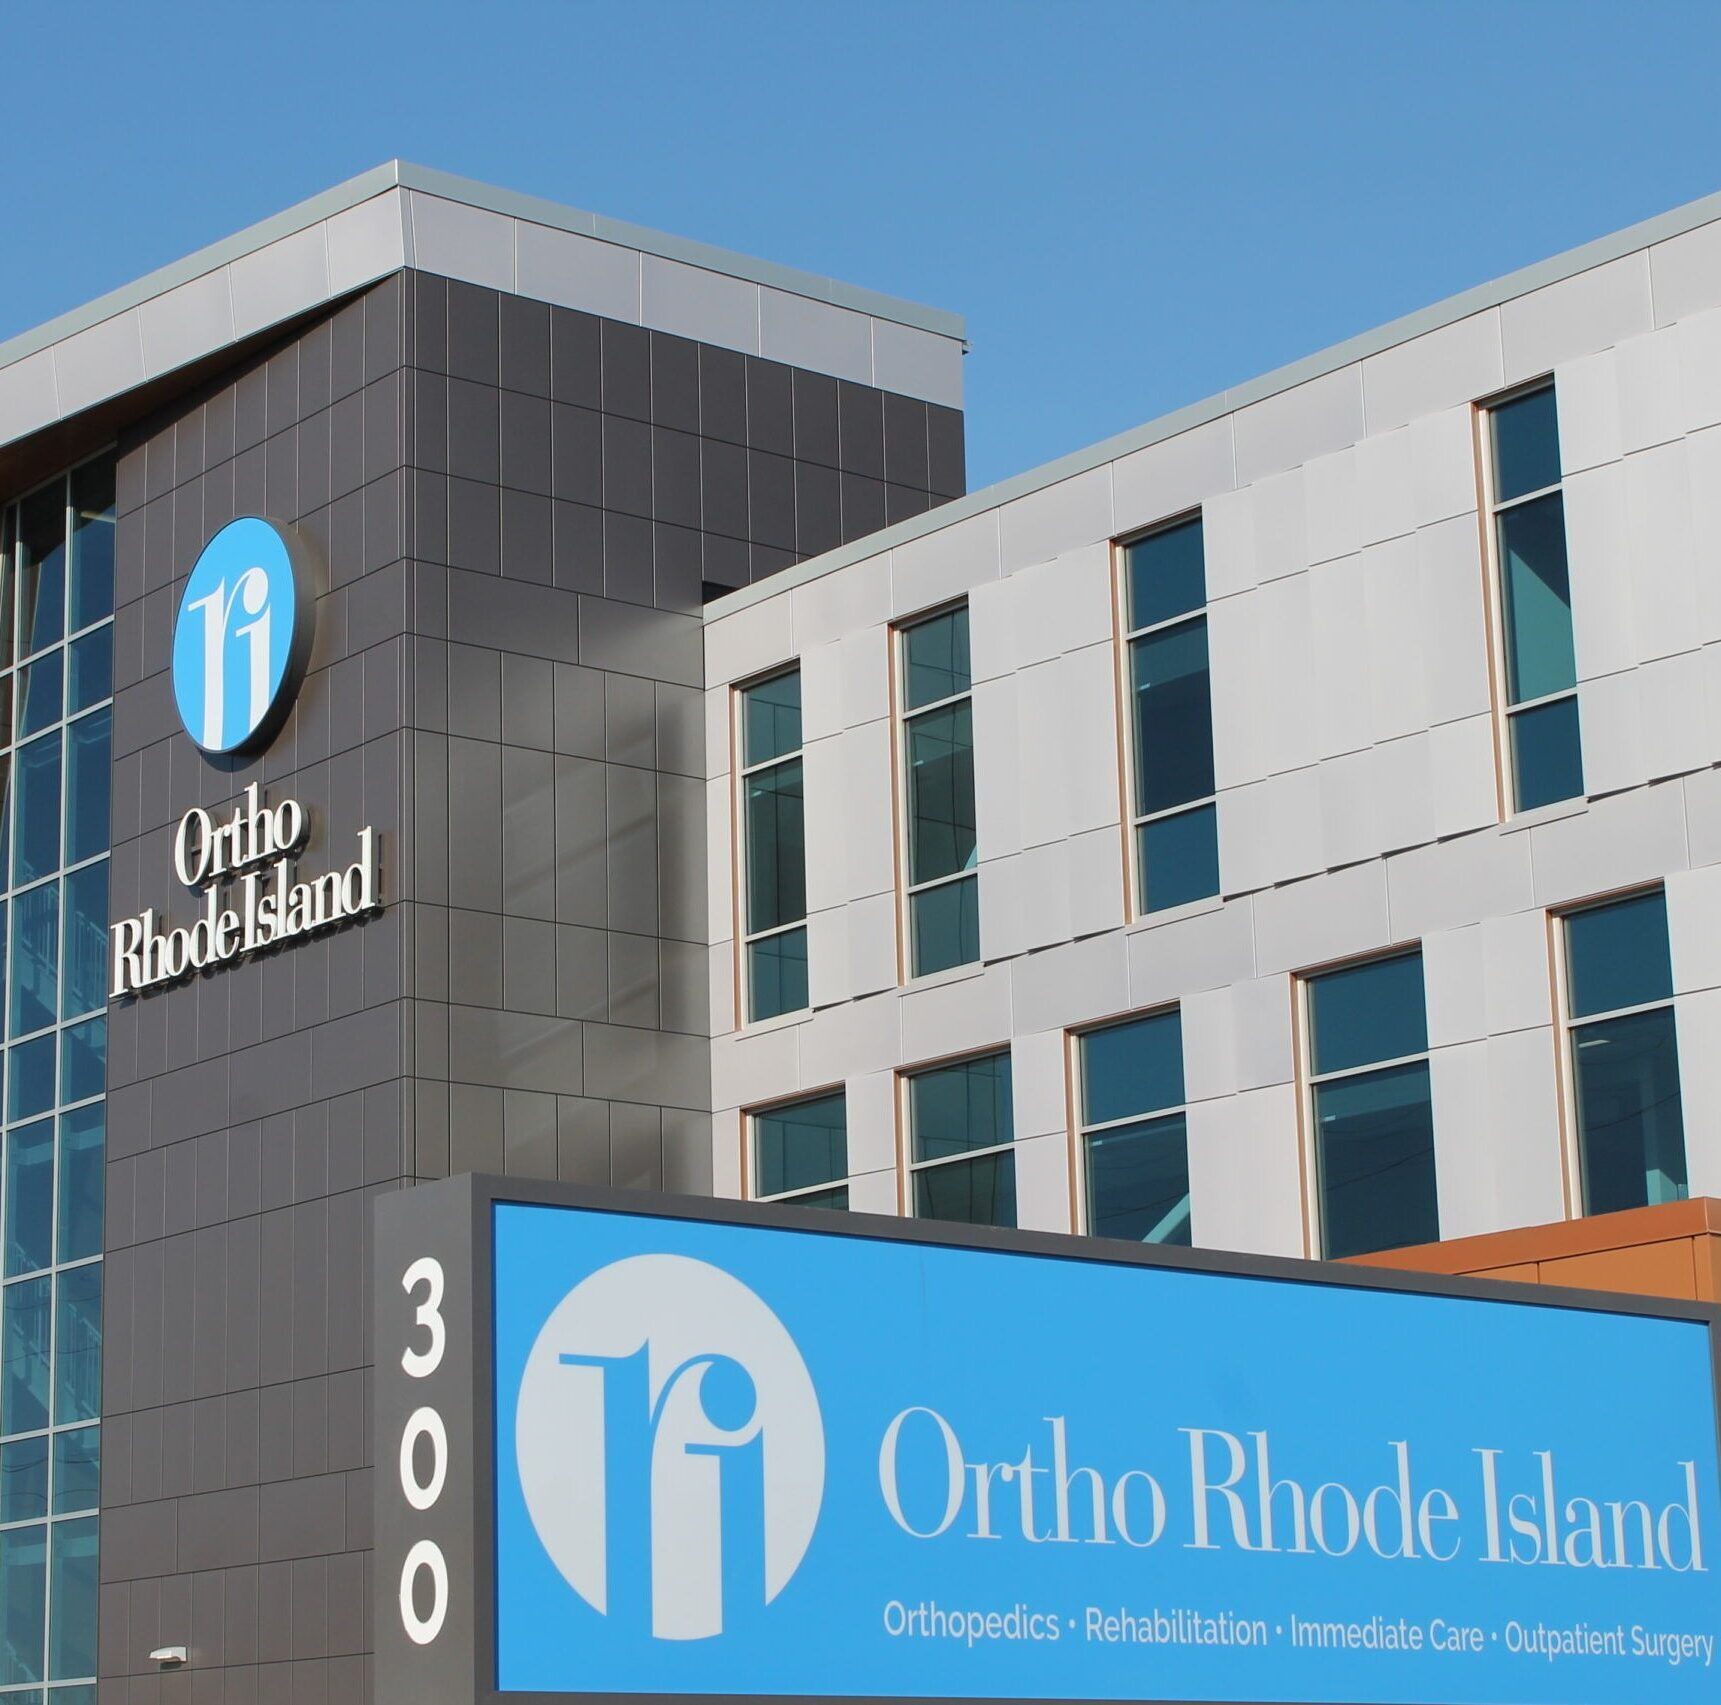 Spire Orthopedic Partners Announces Partnership with Ortho Rhode Island